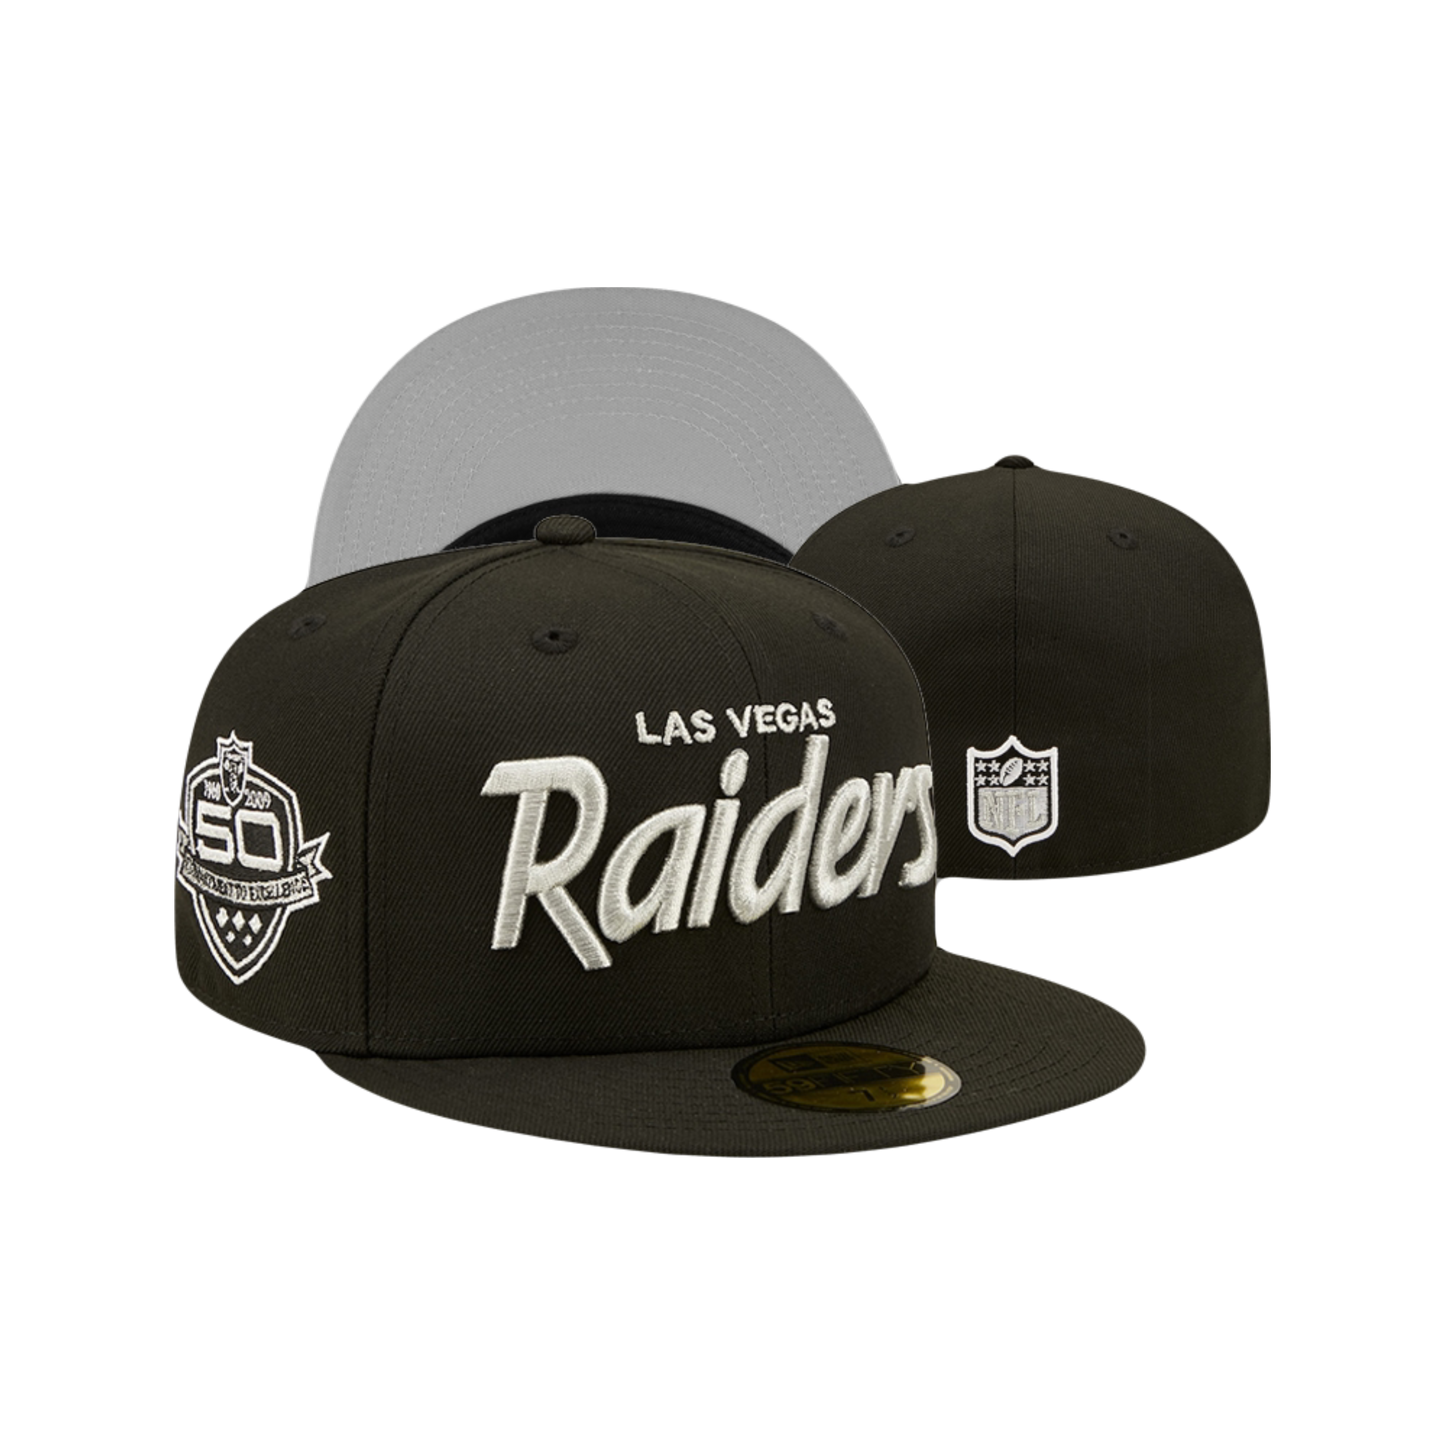 Las Vegas Raiders NFL ‘50 Year Anniversary’ New Era Fitted Hat